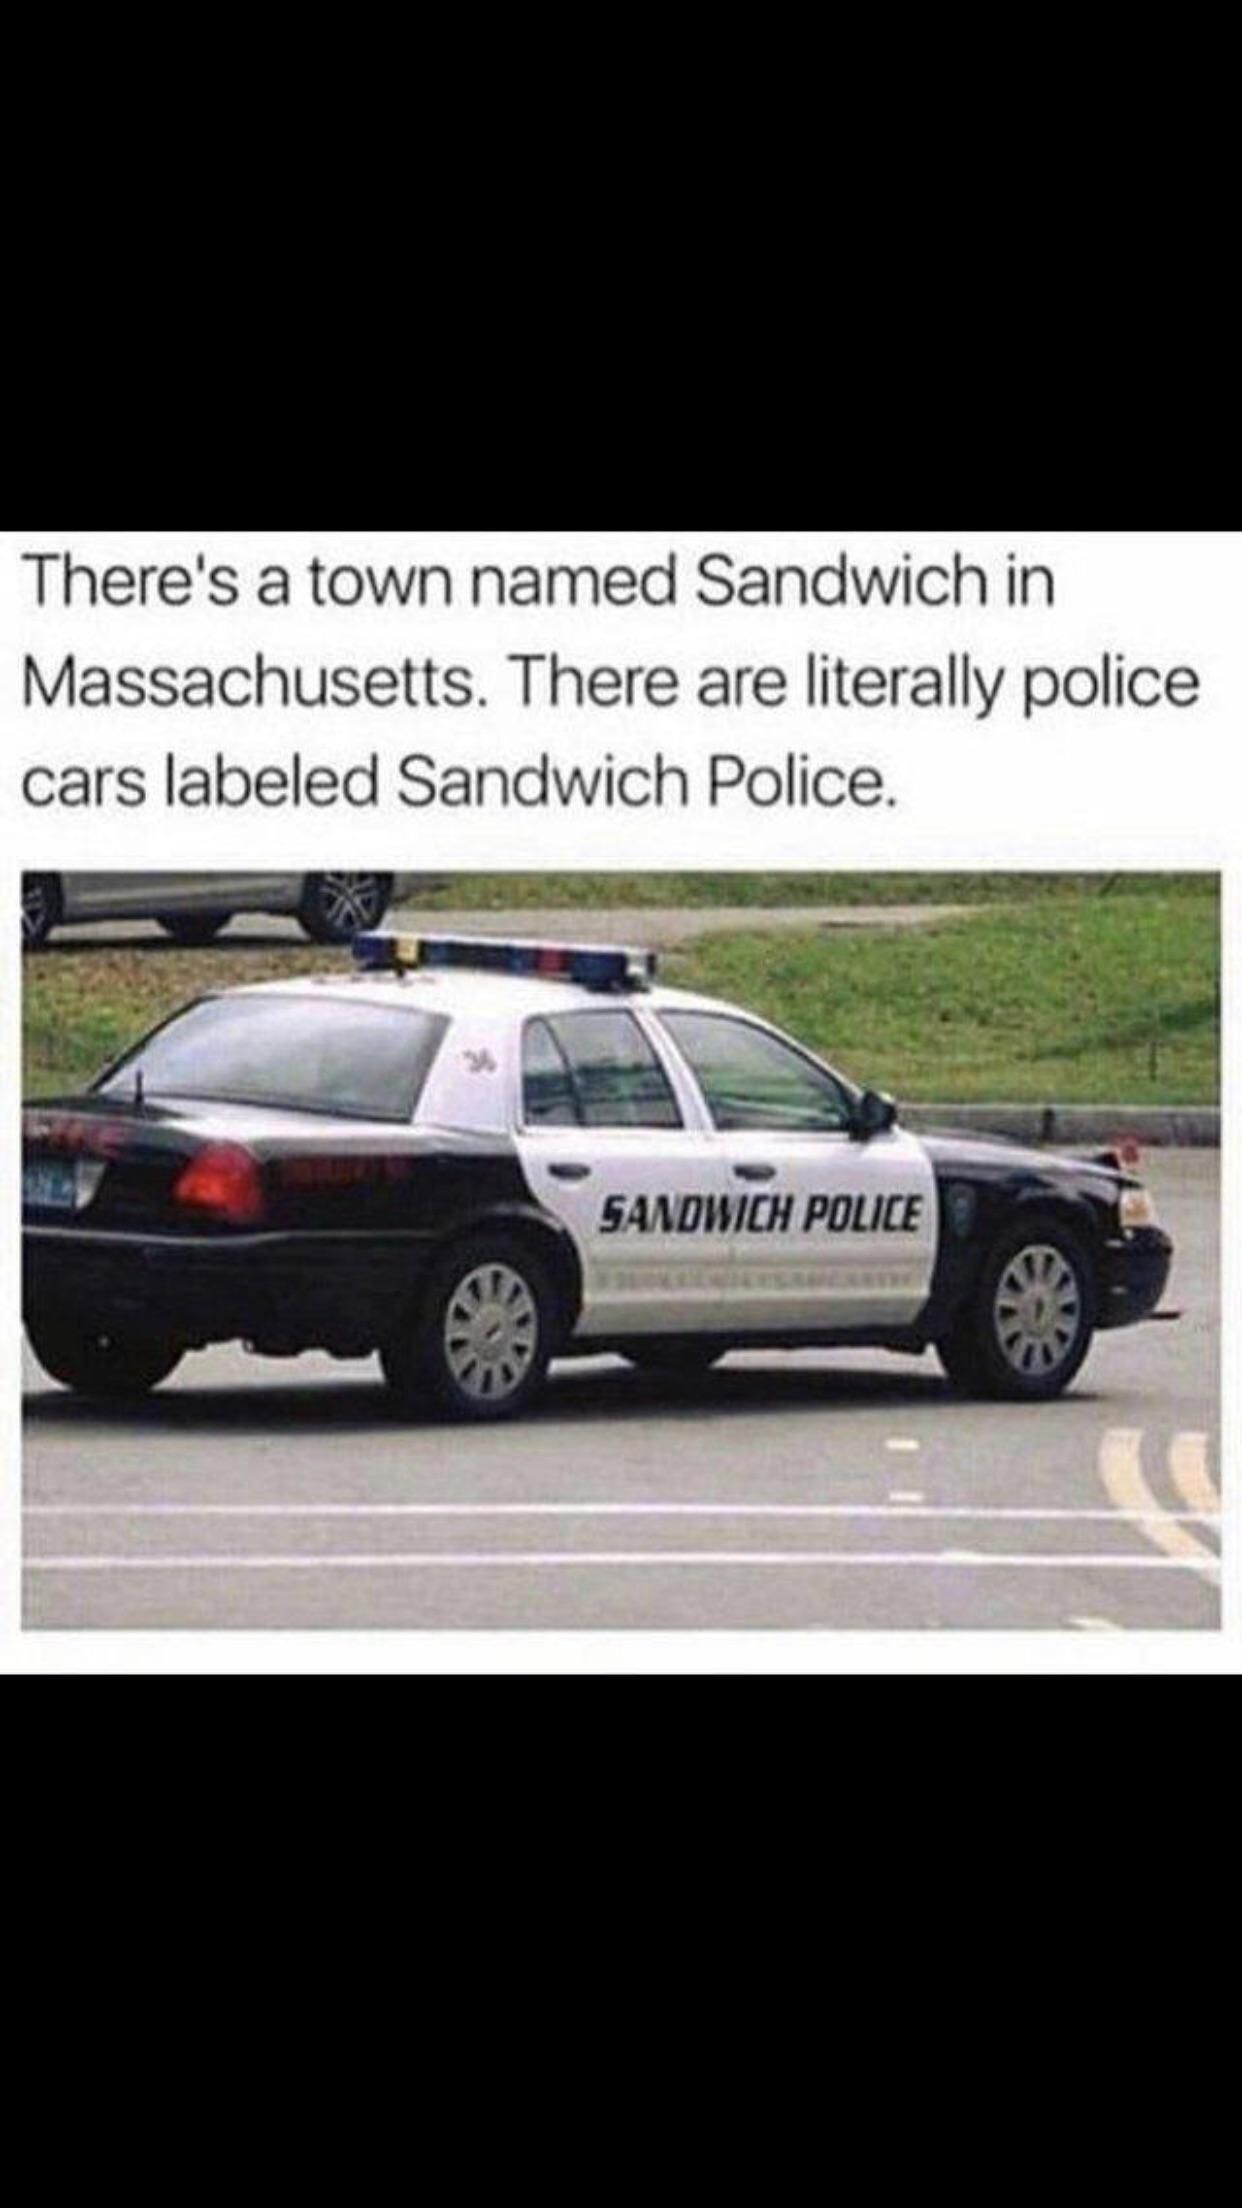 The sandwich police